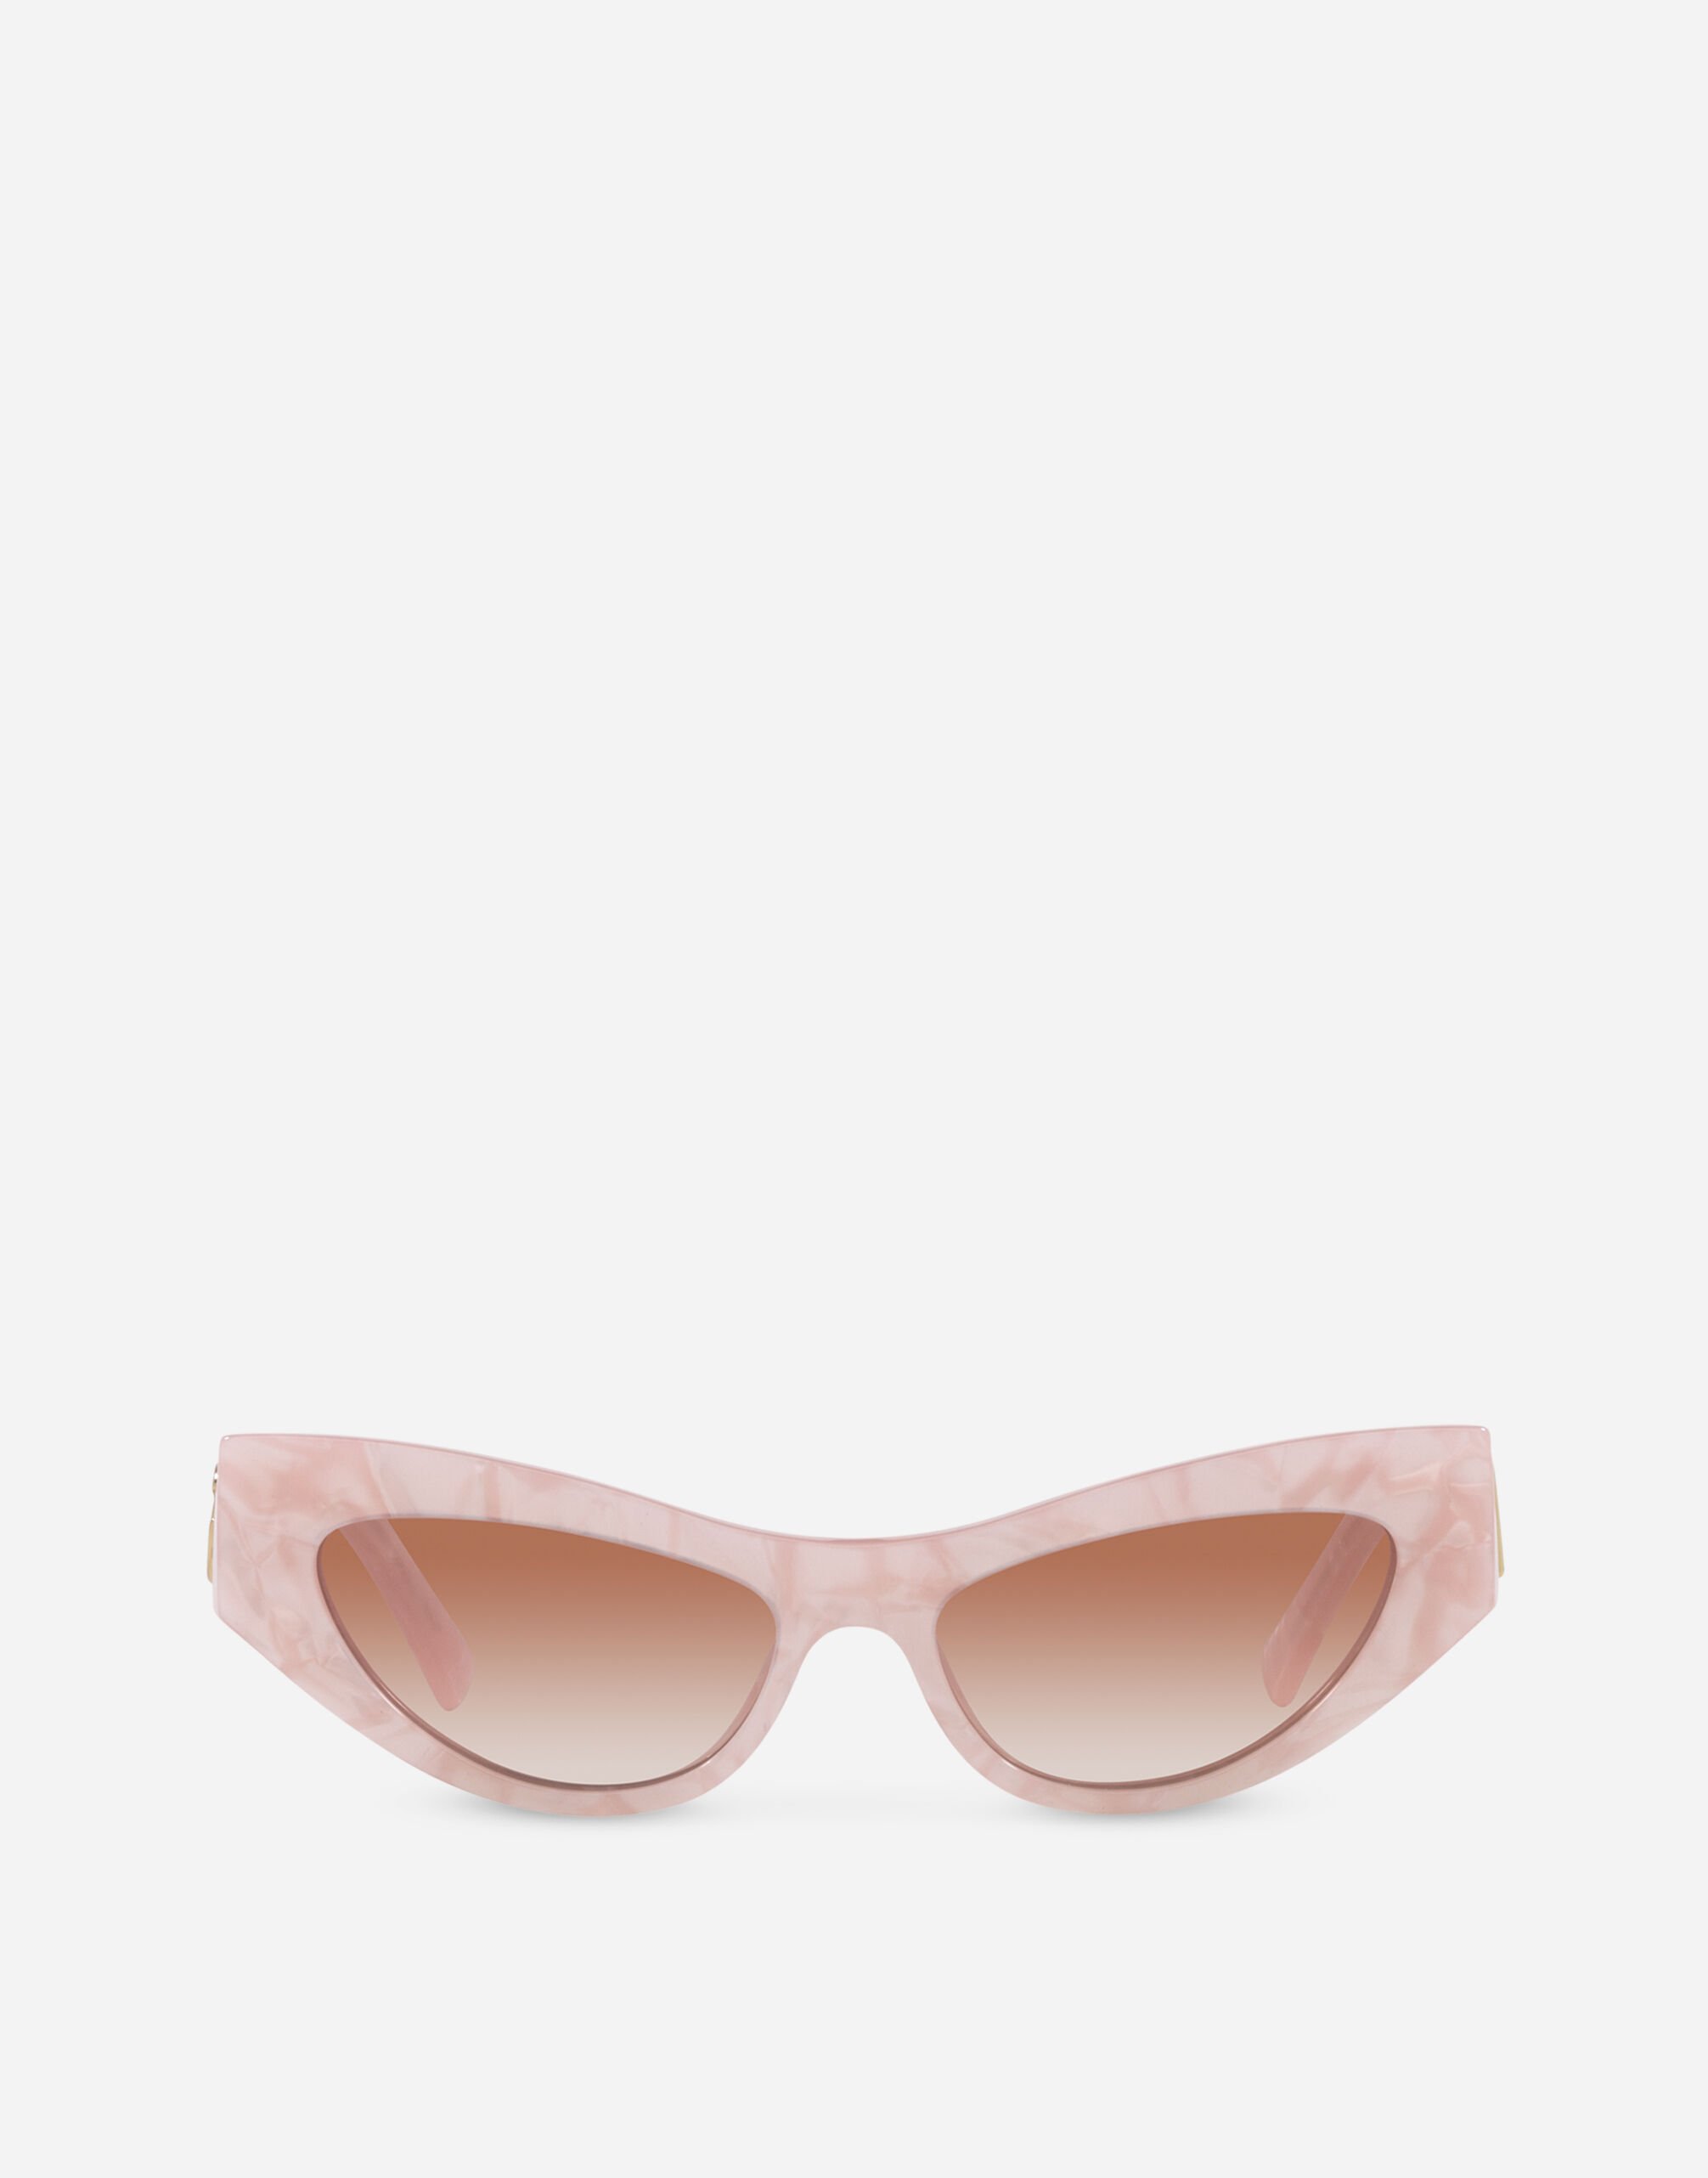 Dolce & Gabbana DG logo sunglasses Print FN090RGDAOZ